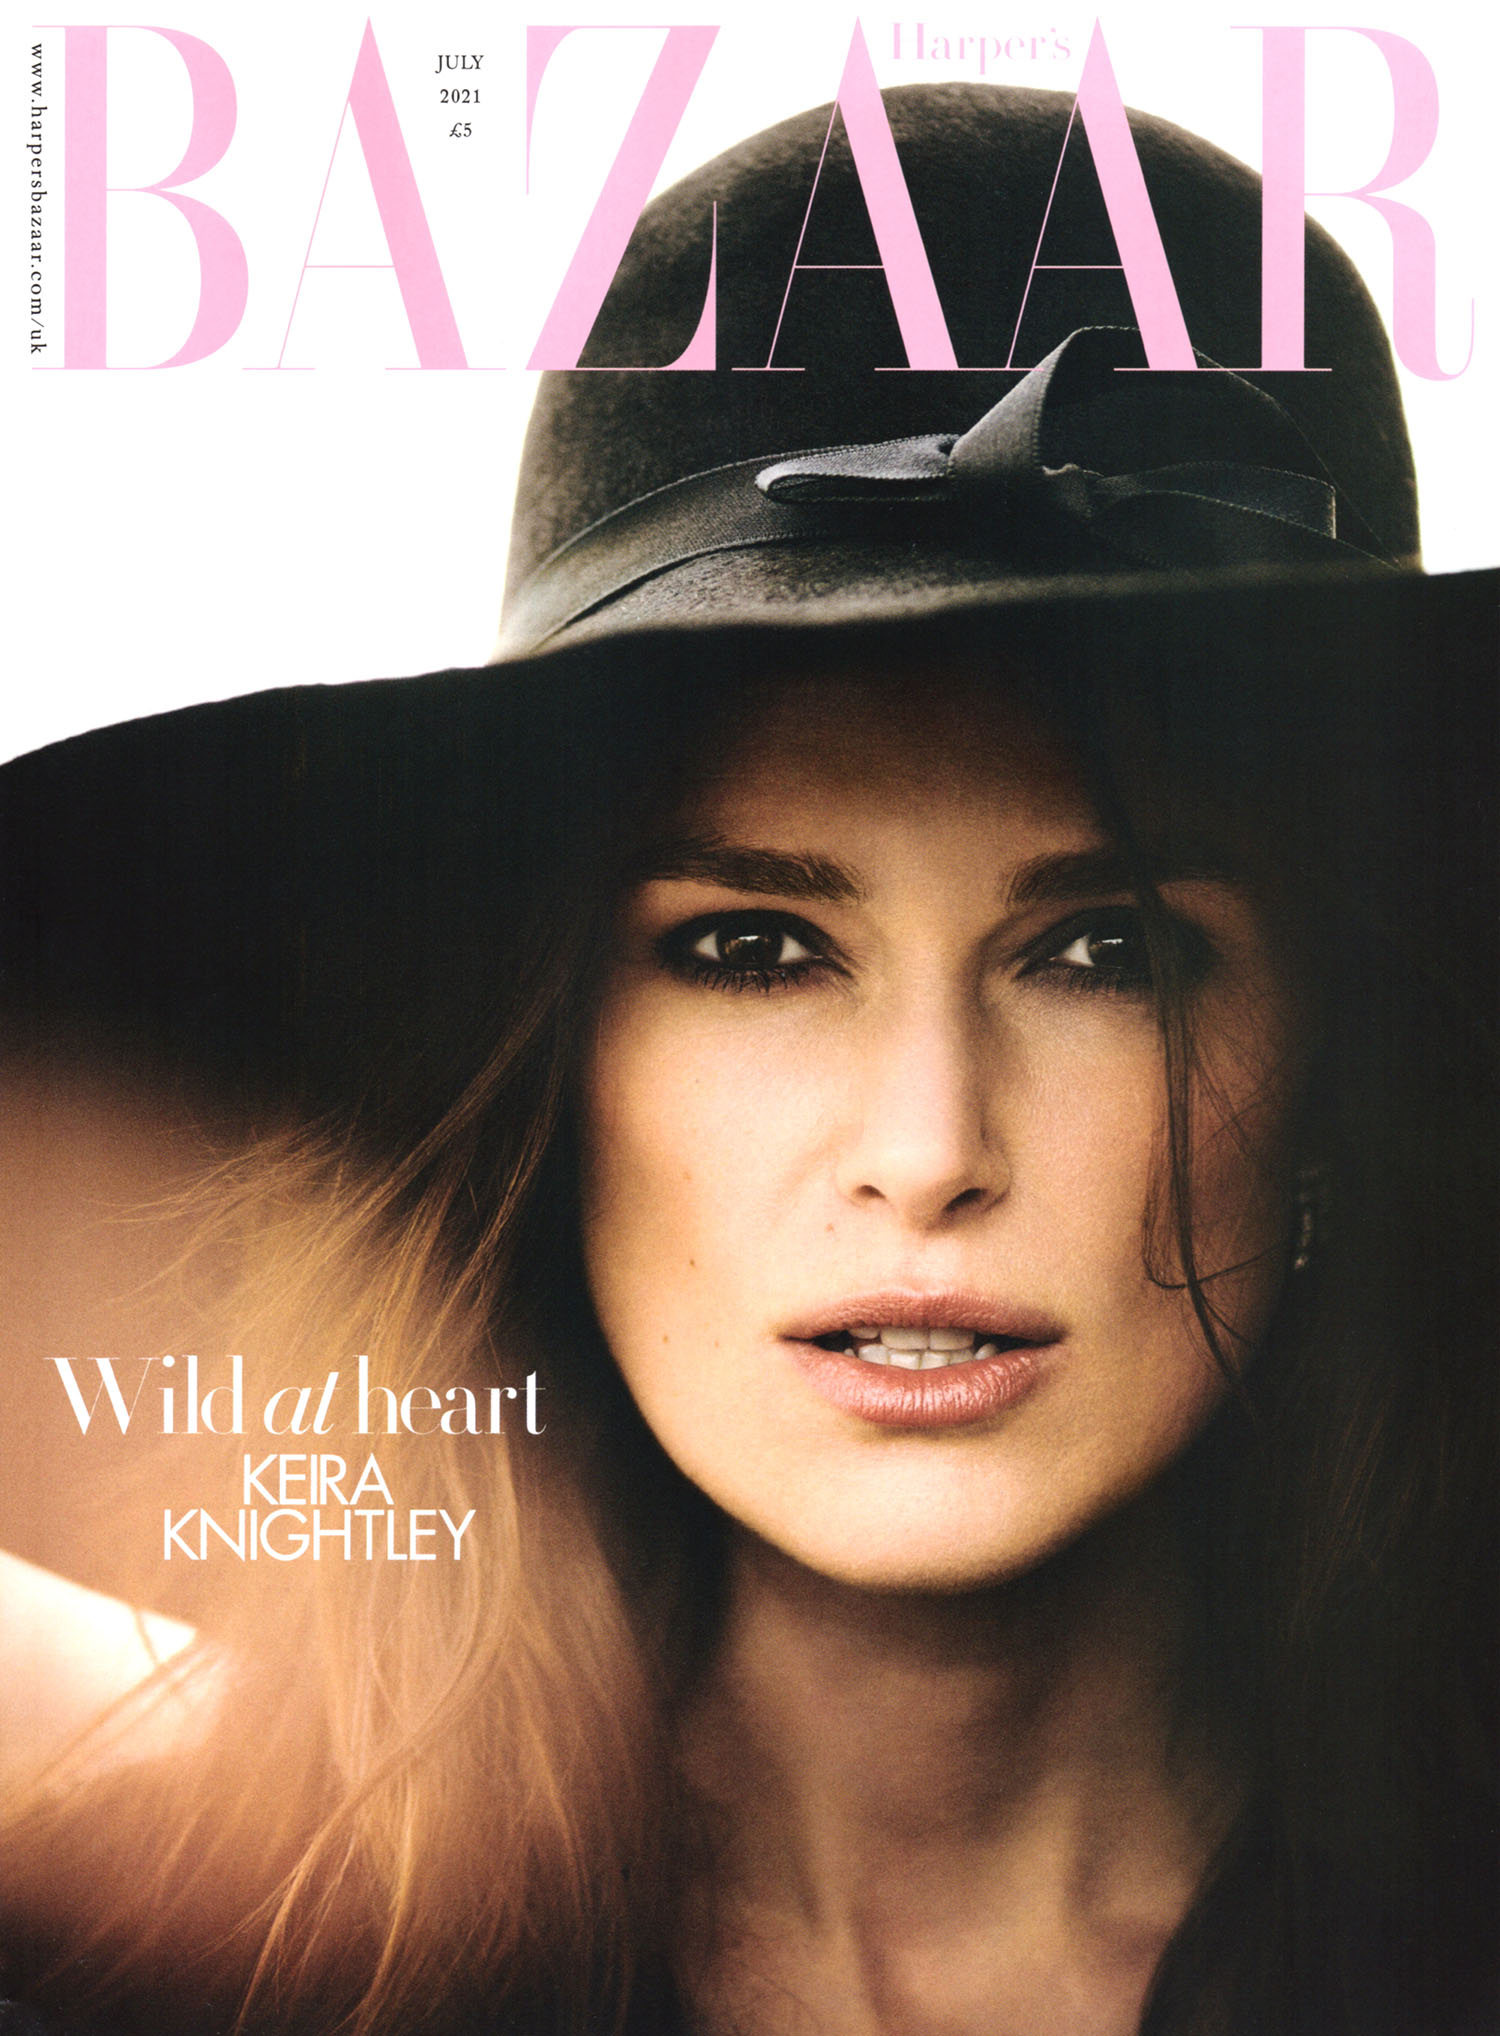 Keira Knightley covers Harper’s Bazaar UK July 2021 by Boo George